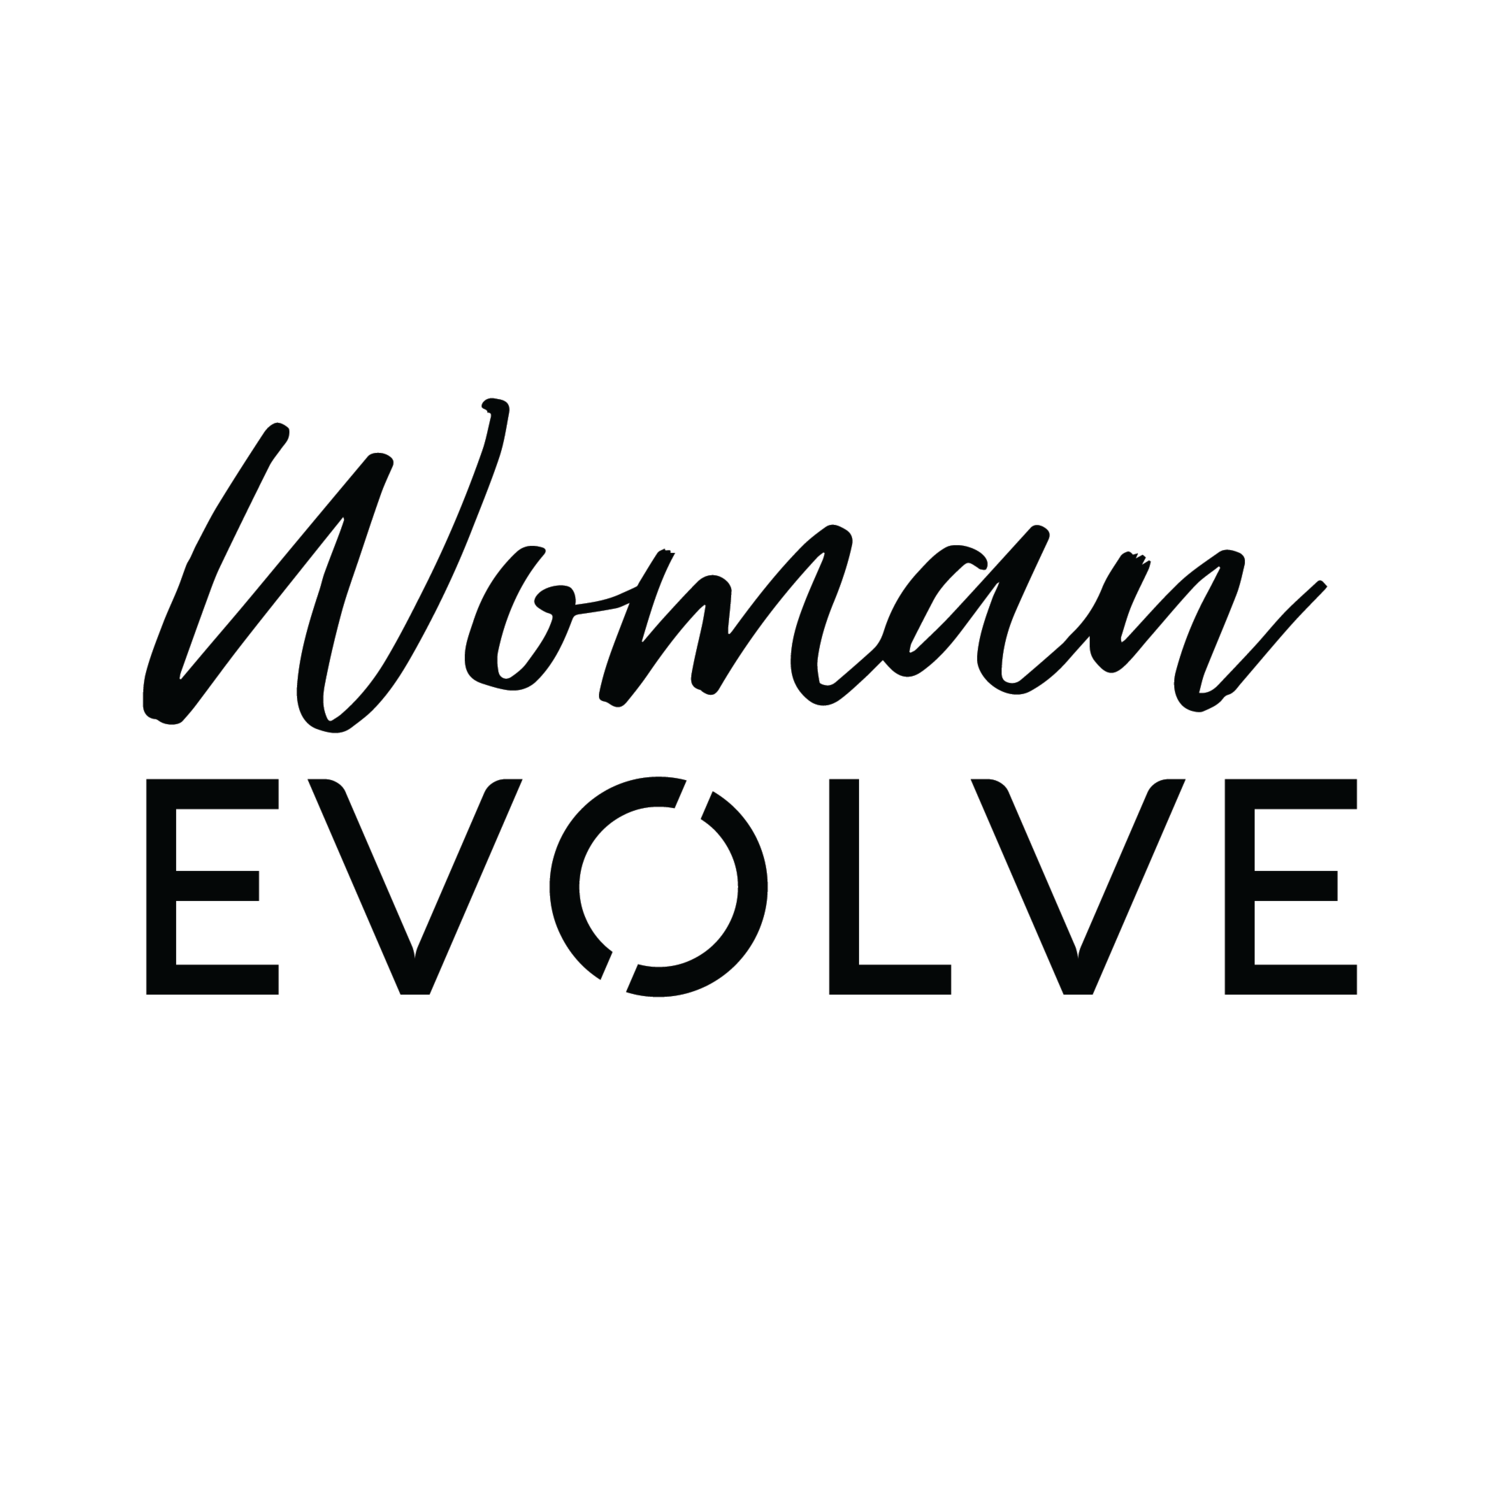 Woman evolve podcast logo